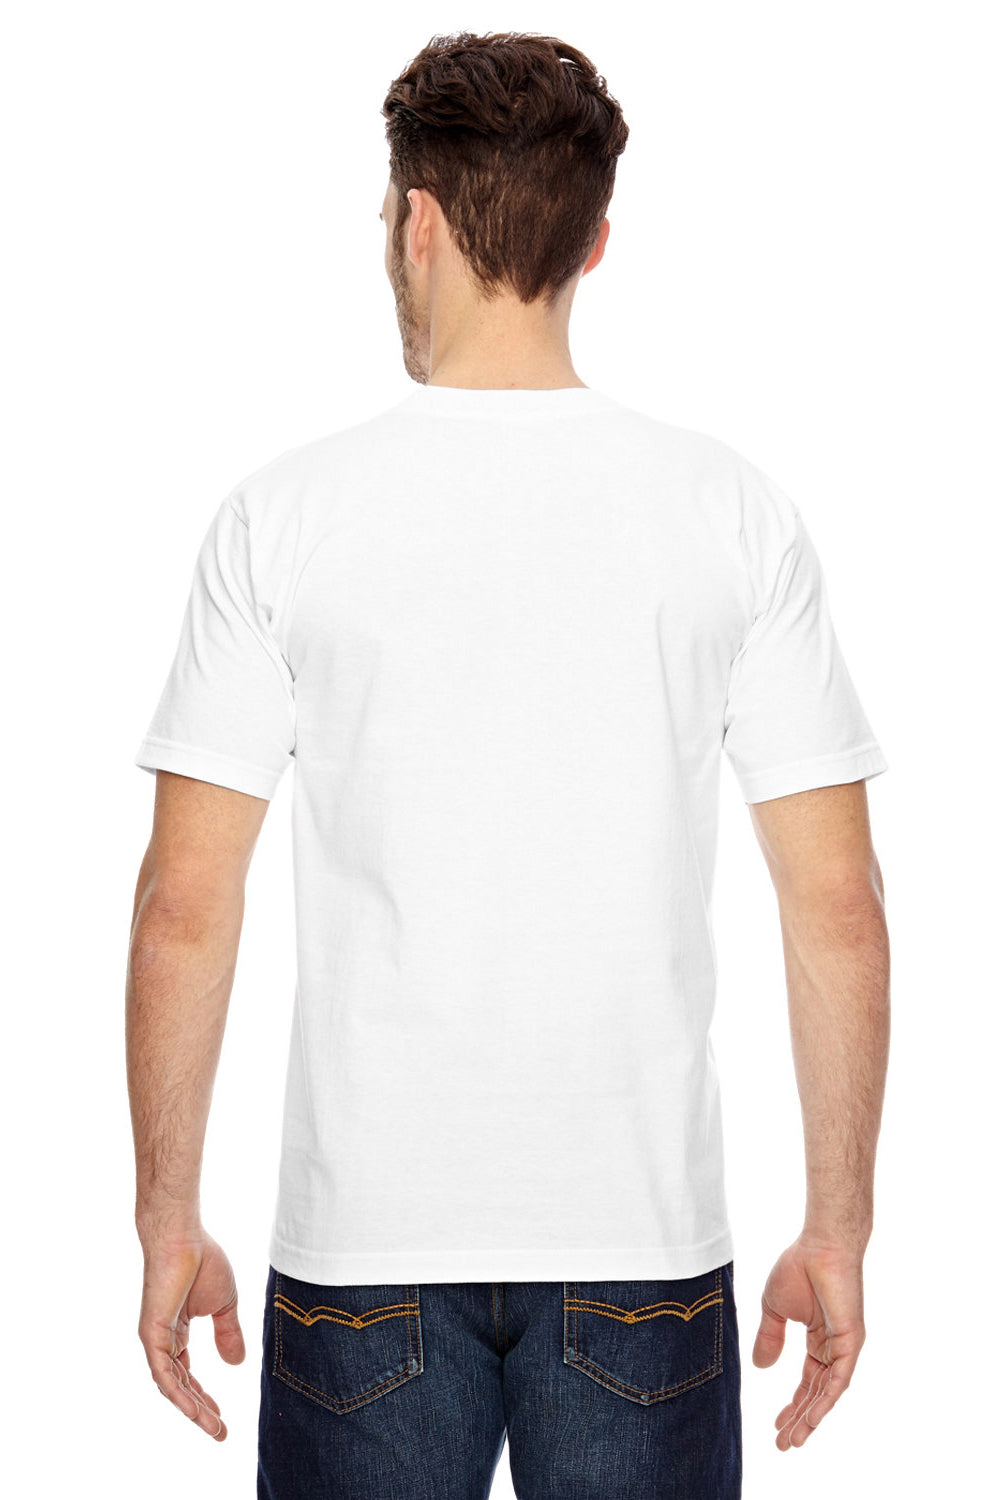 Bayside BA7100 Mens USA Made Short Sleeve Crewneck T-Shirt w/ Pocket White Model Back